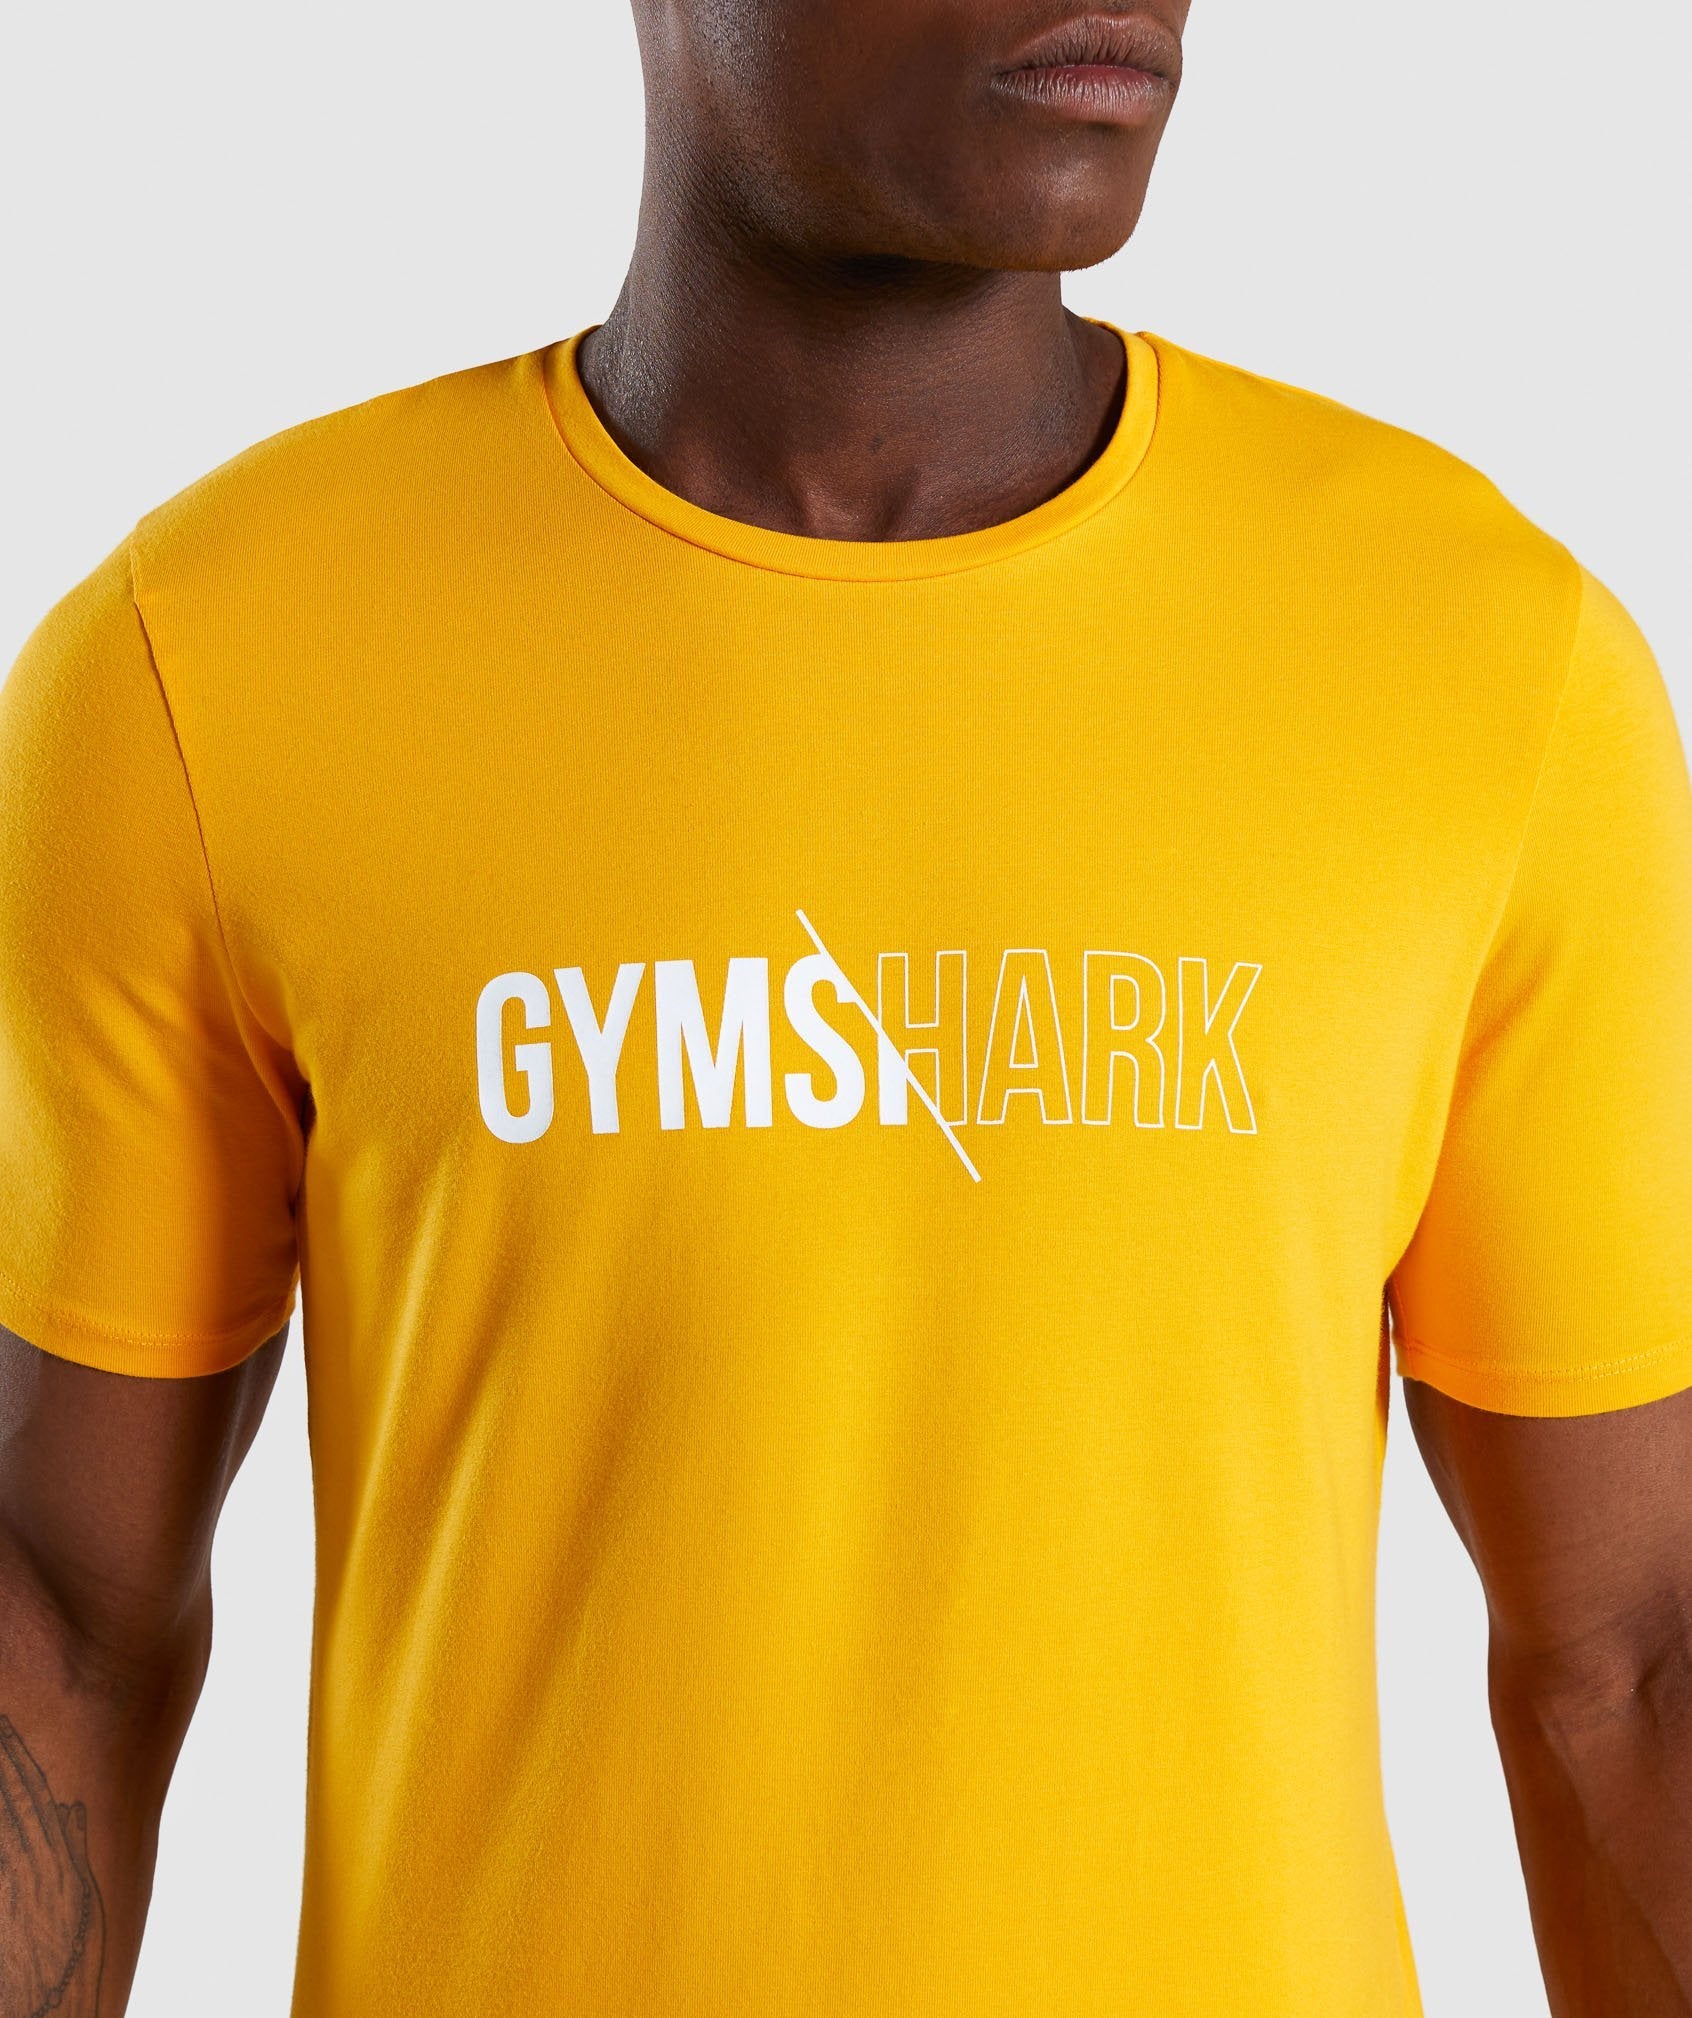 Distort T-Shirt in Citrus Yellow - view 6